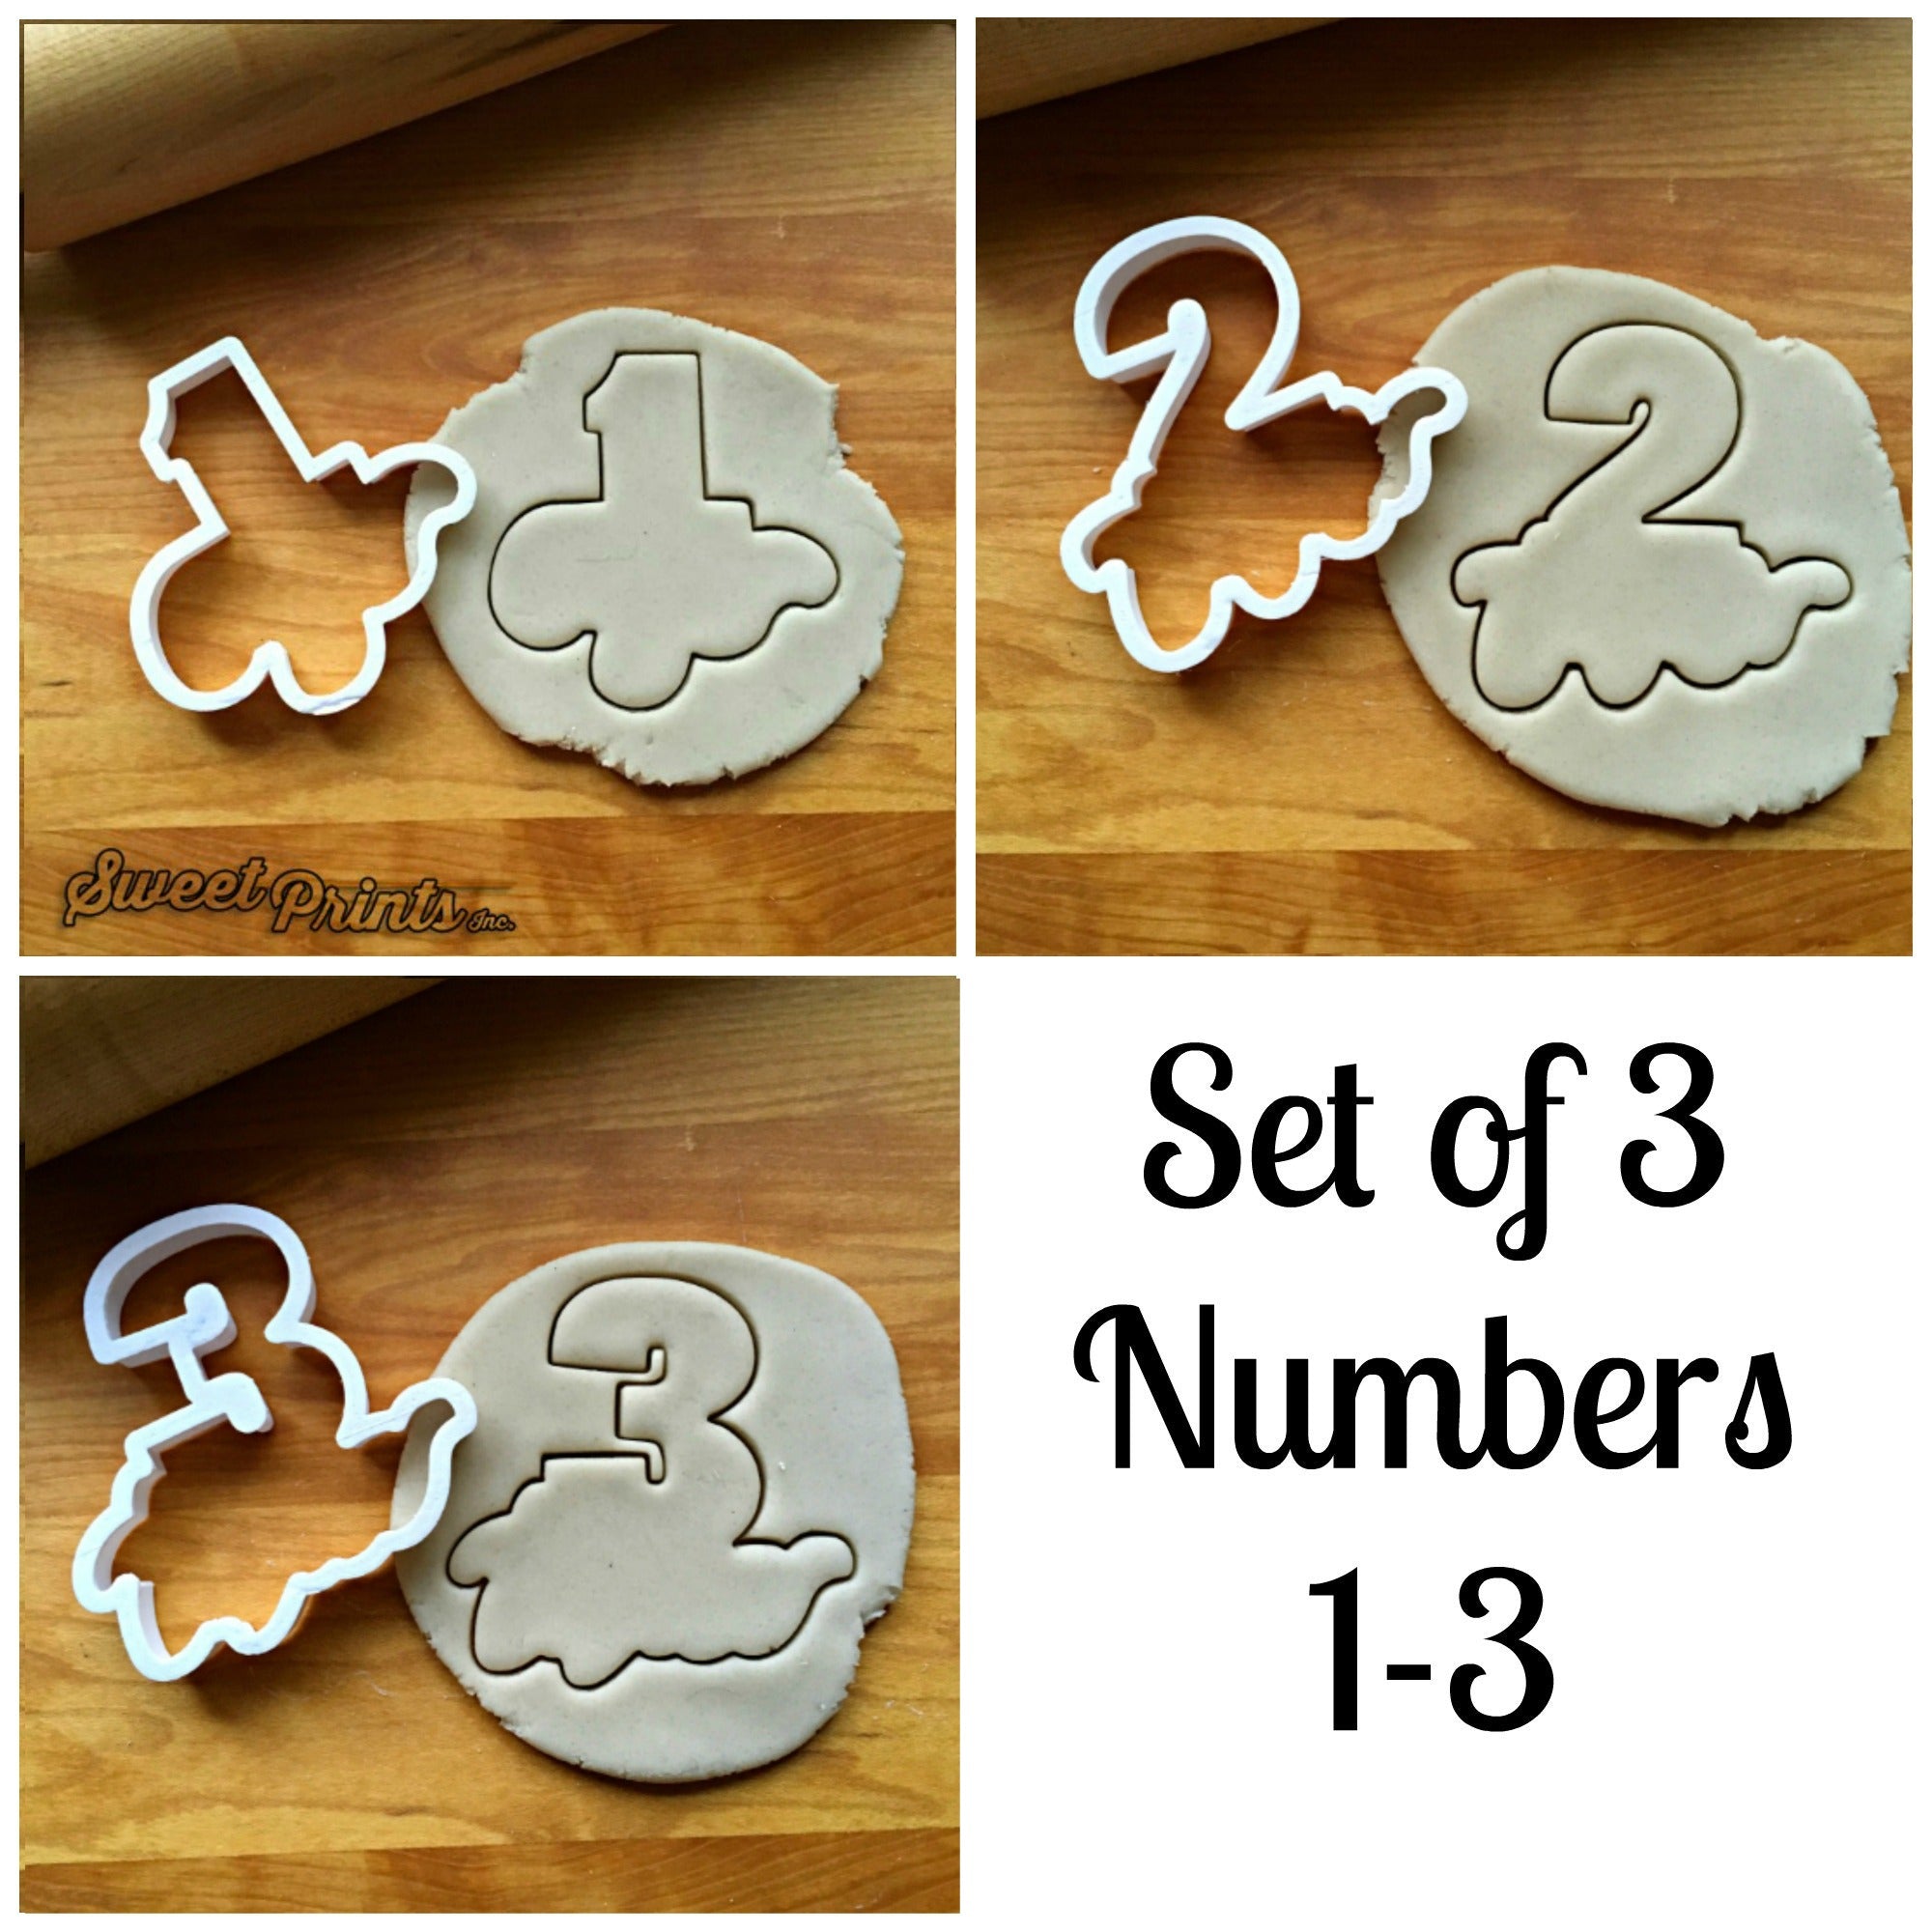 Set of 3 Lettered Number 1-3 Cookie Cutters/Dishwasher Safe